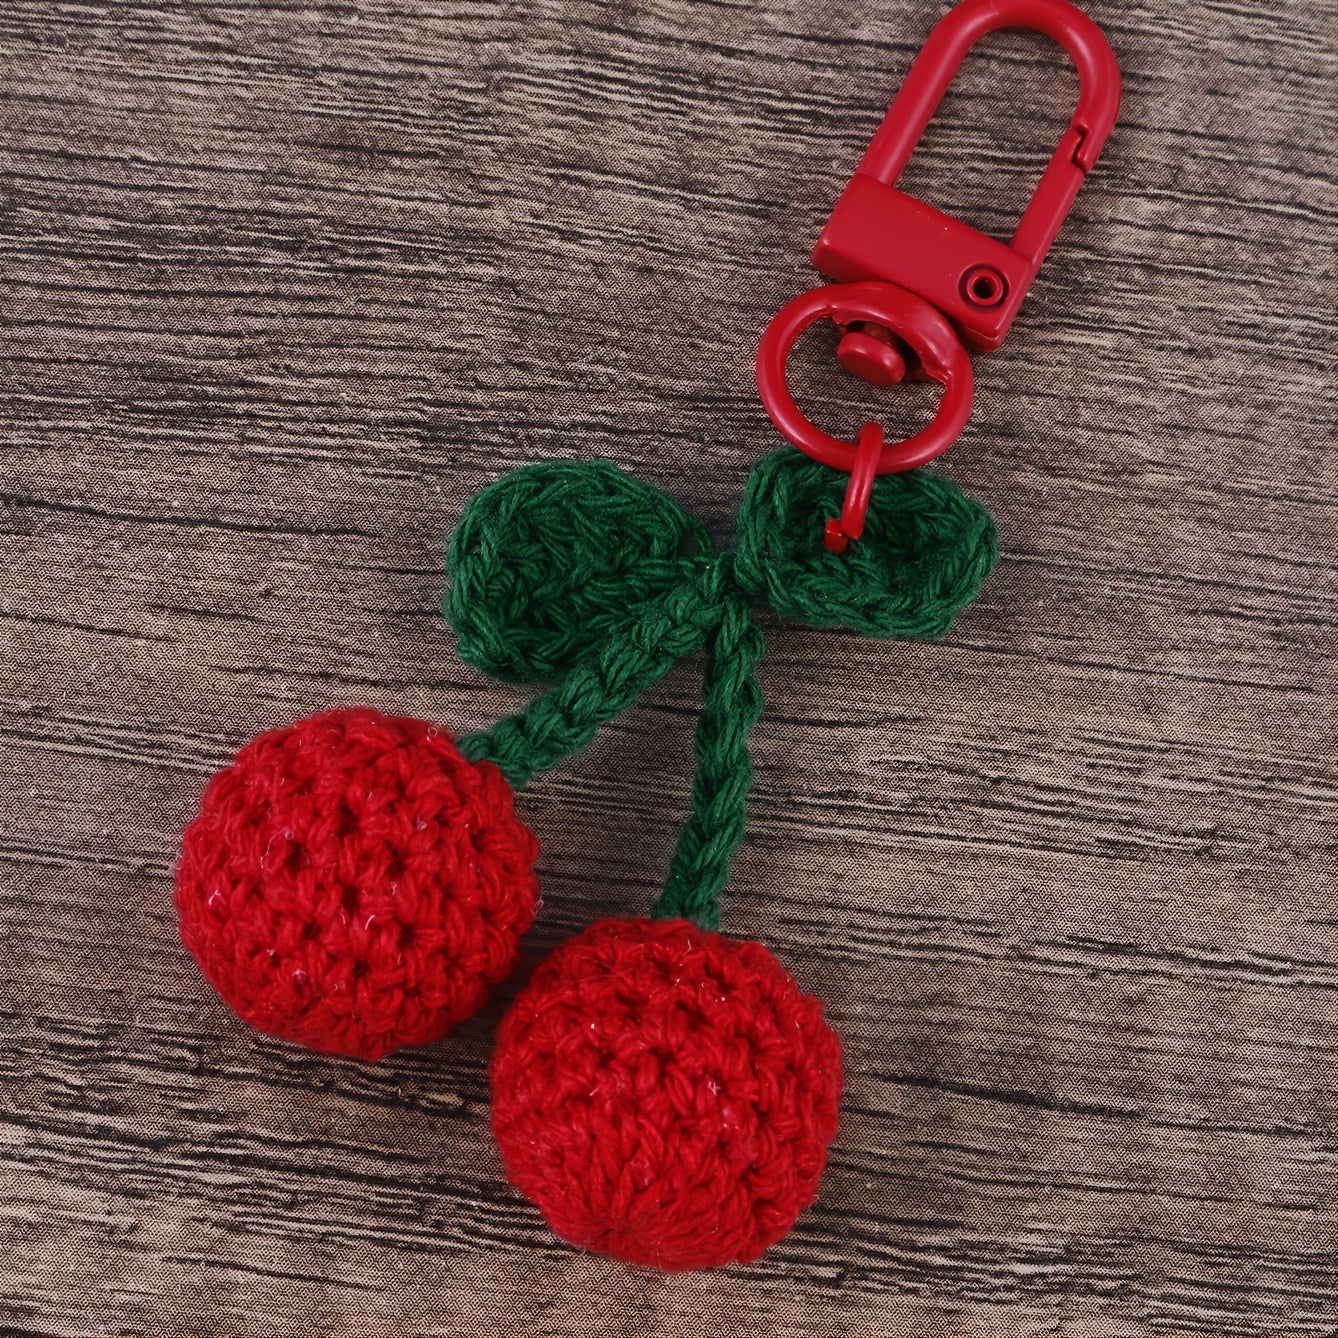 Wool Hand-made Hook Needle Cherry Ball Bag Accessories Keychain Pendant 1Pcs